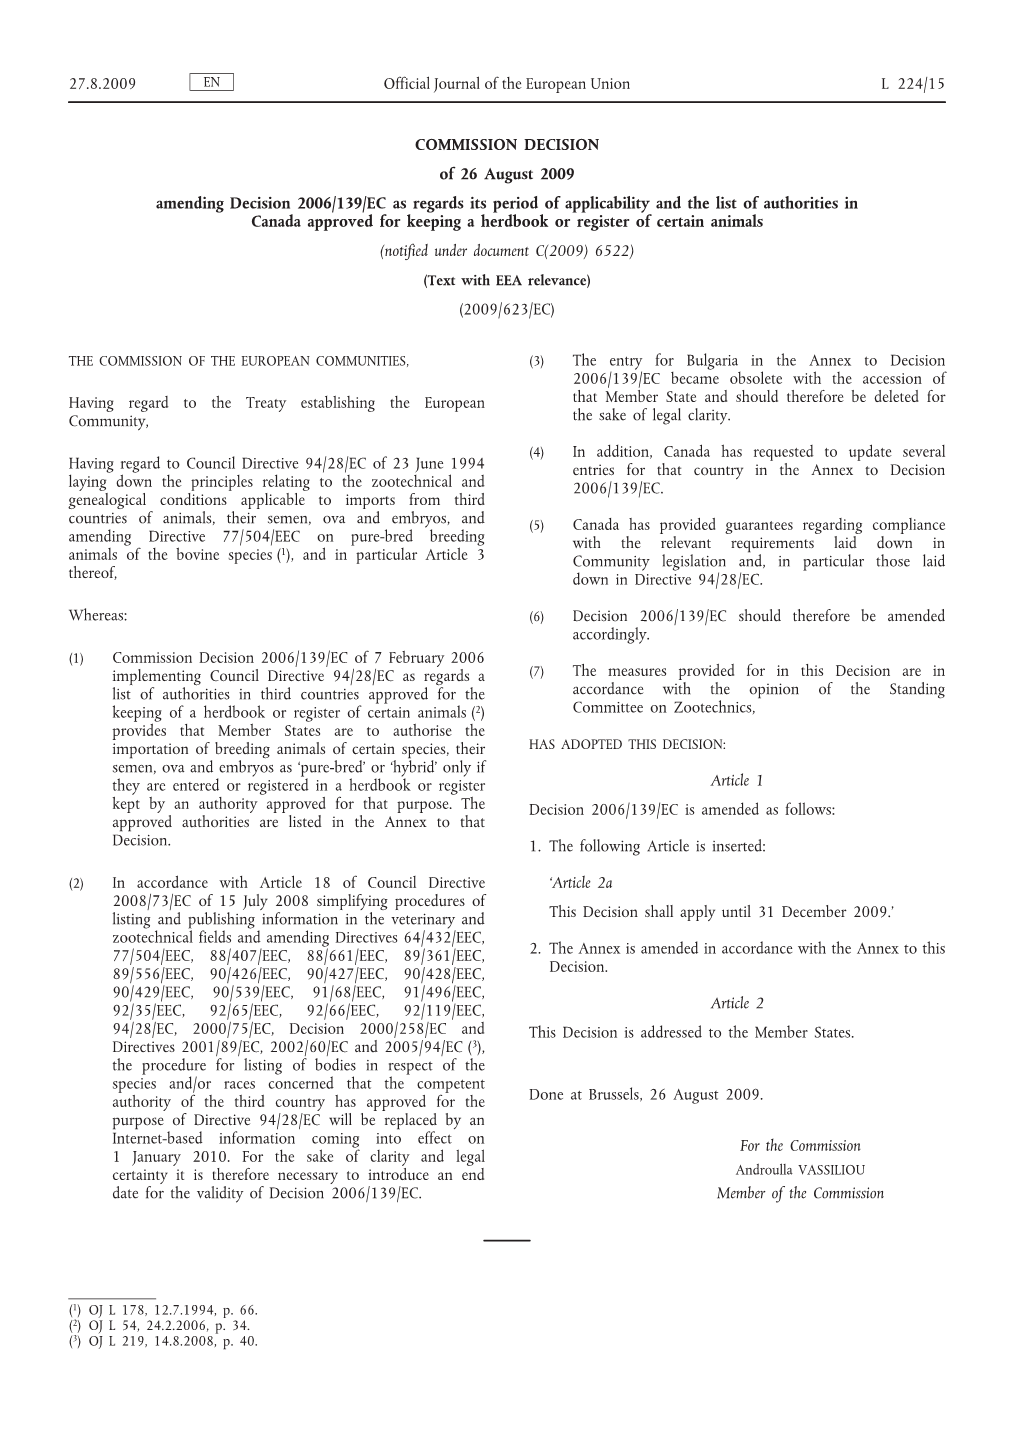 Commission Decision of 26 August 2009 Amending Decision 2006/139